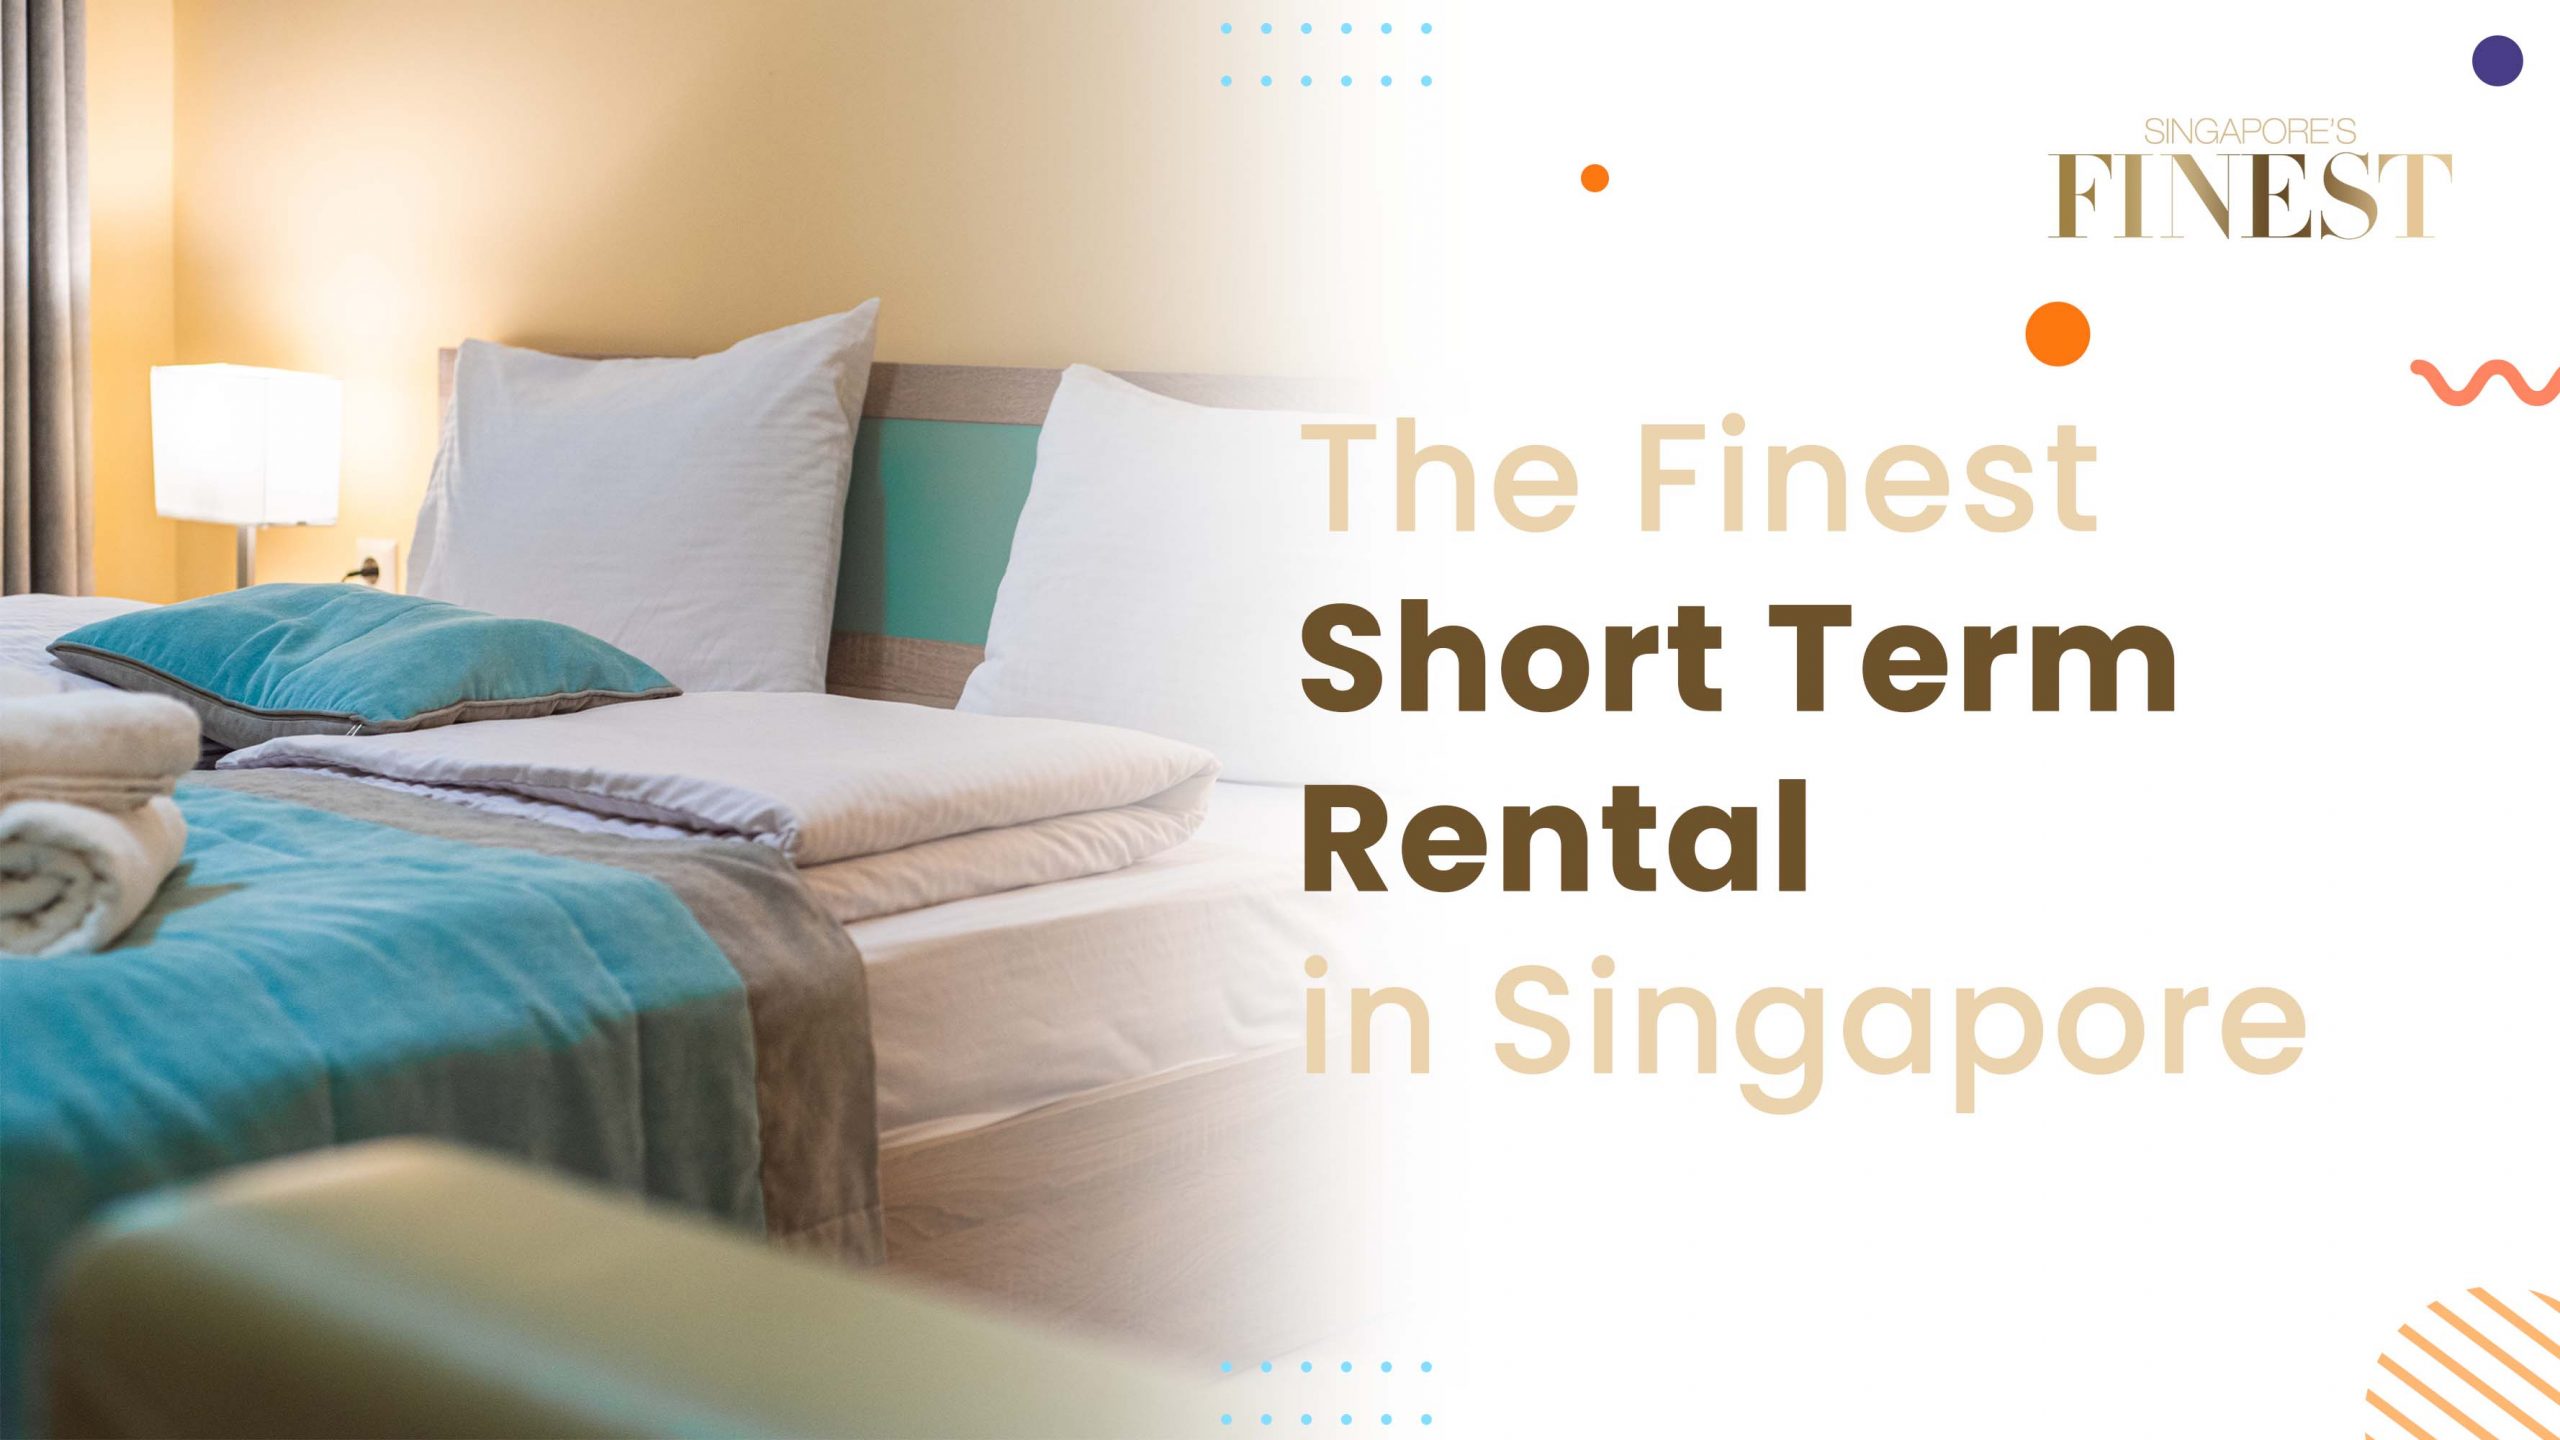 Finest Short Term Rental in Singapore